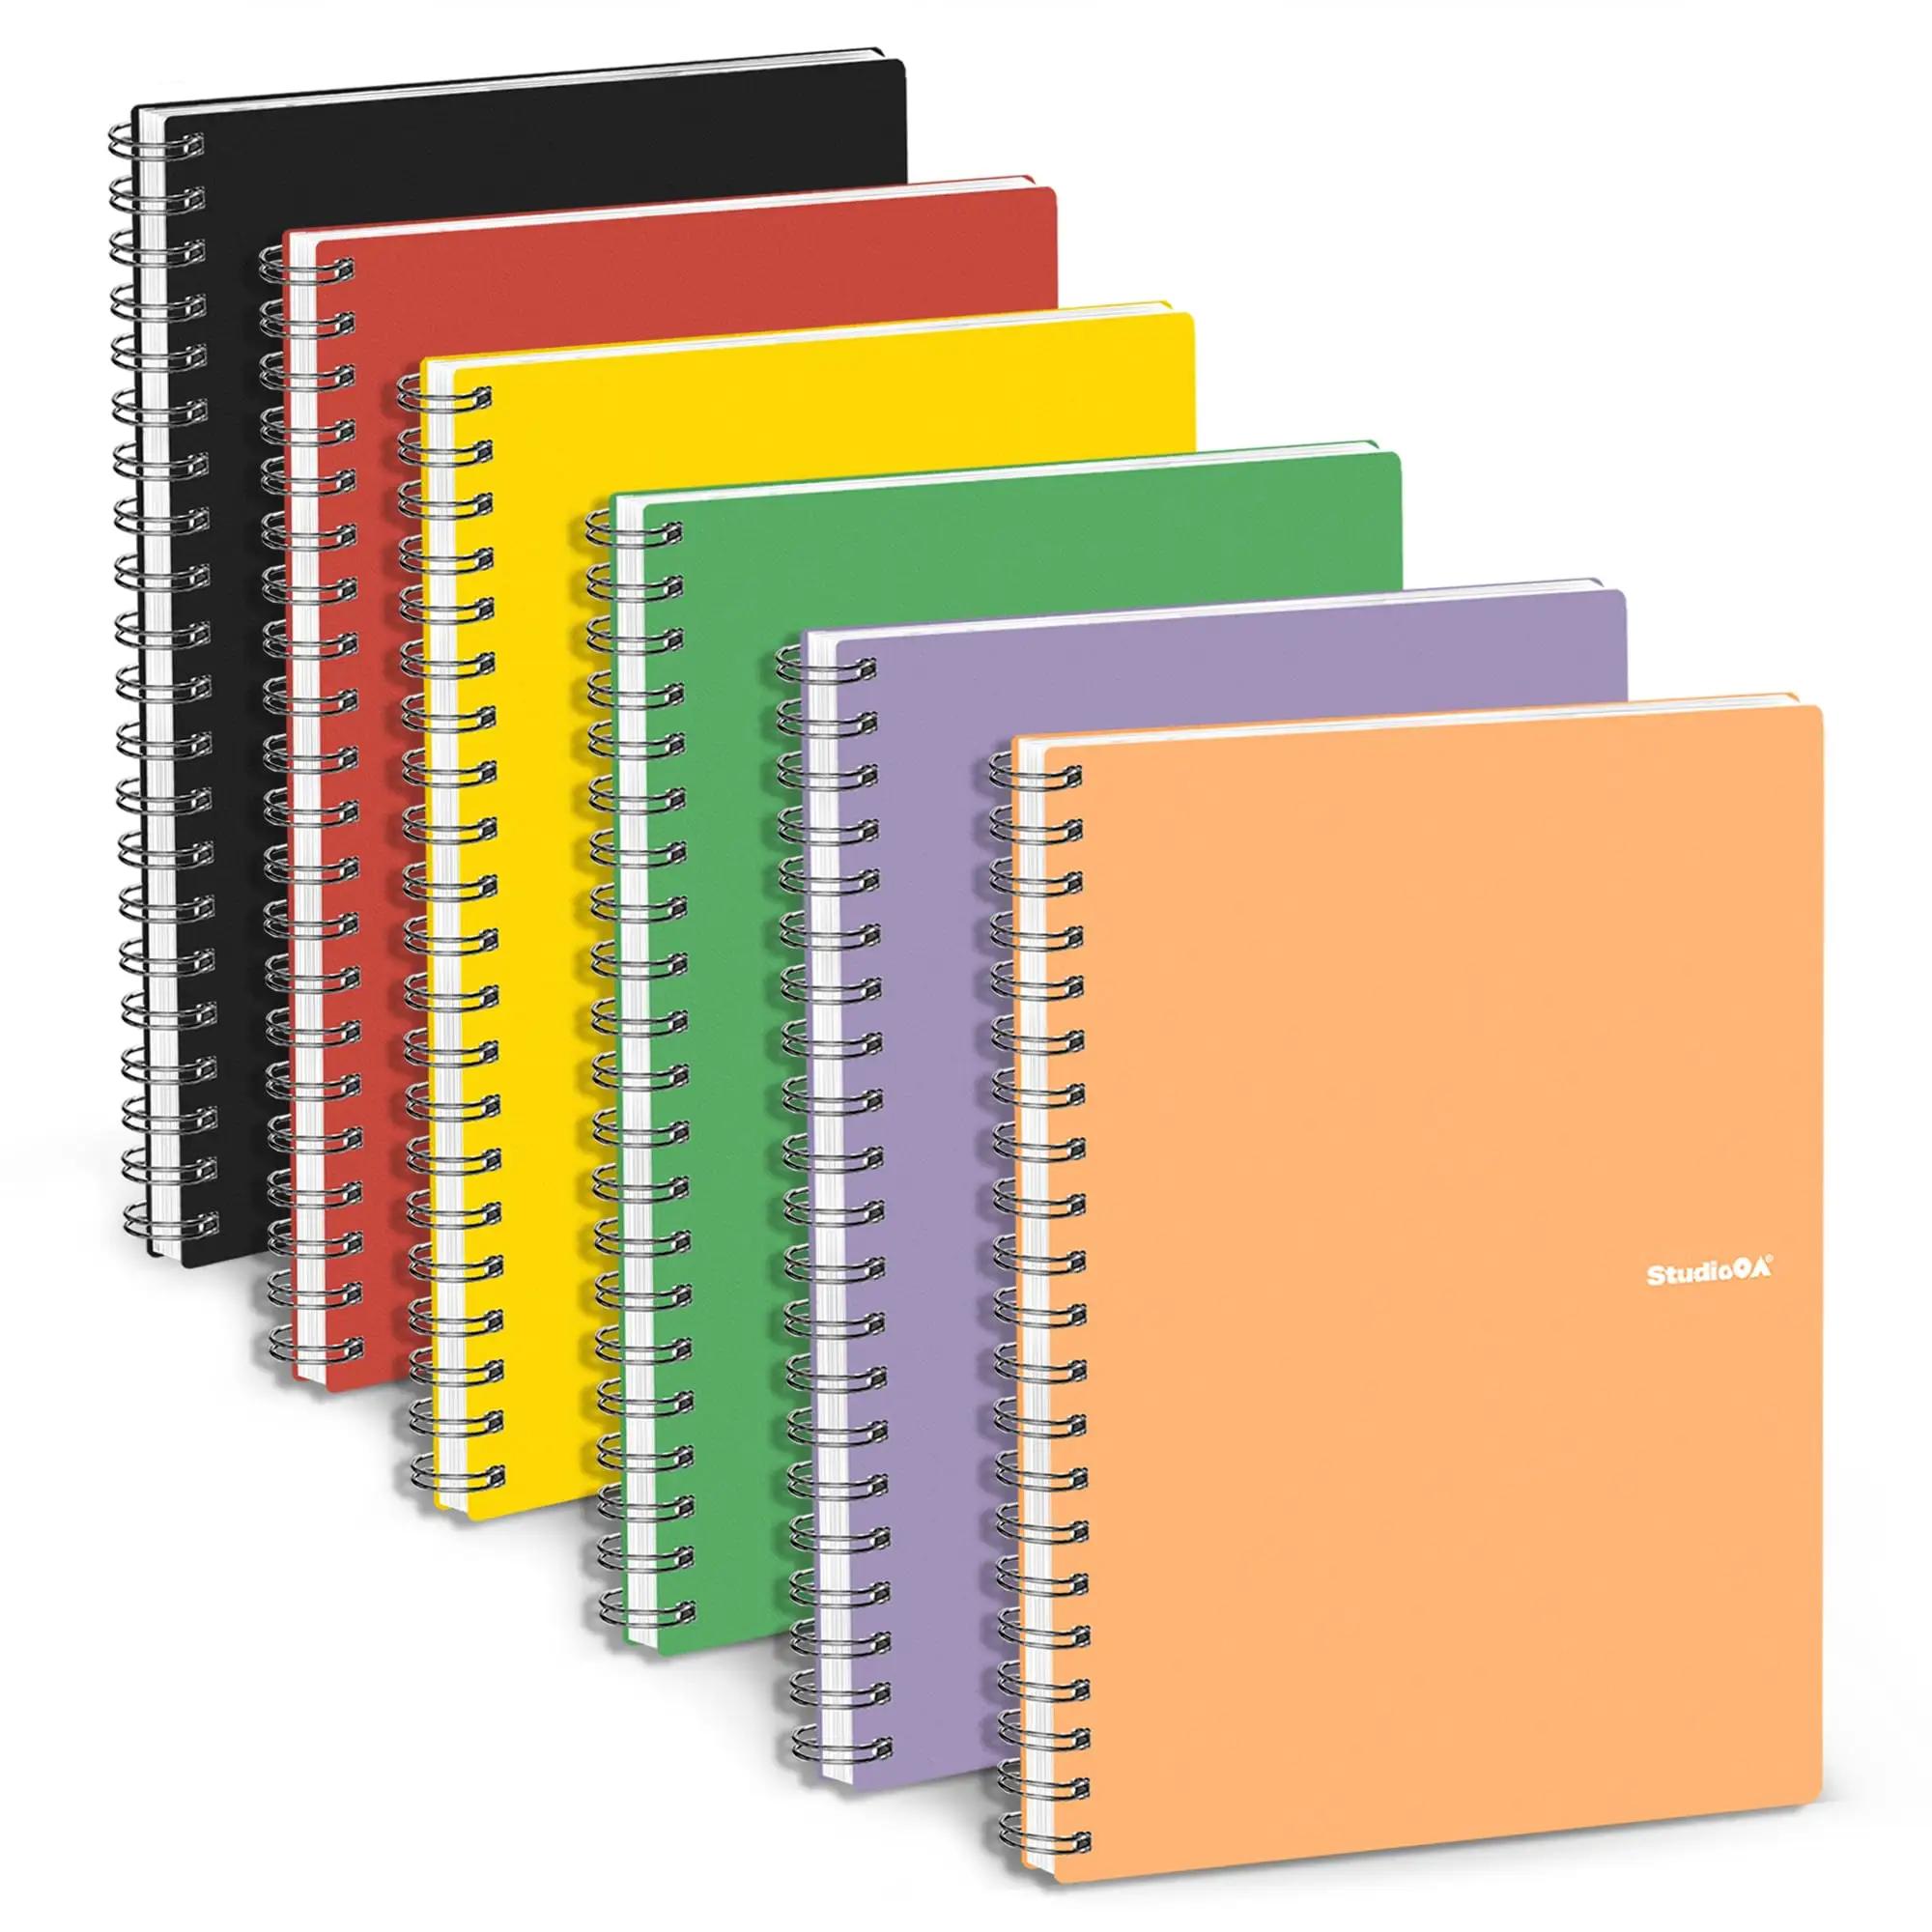 Hot Sales Spiral Index Schedule Journal Planner Calendar Organizer Agenda Notebook Customized Durable PP Cover For School Office